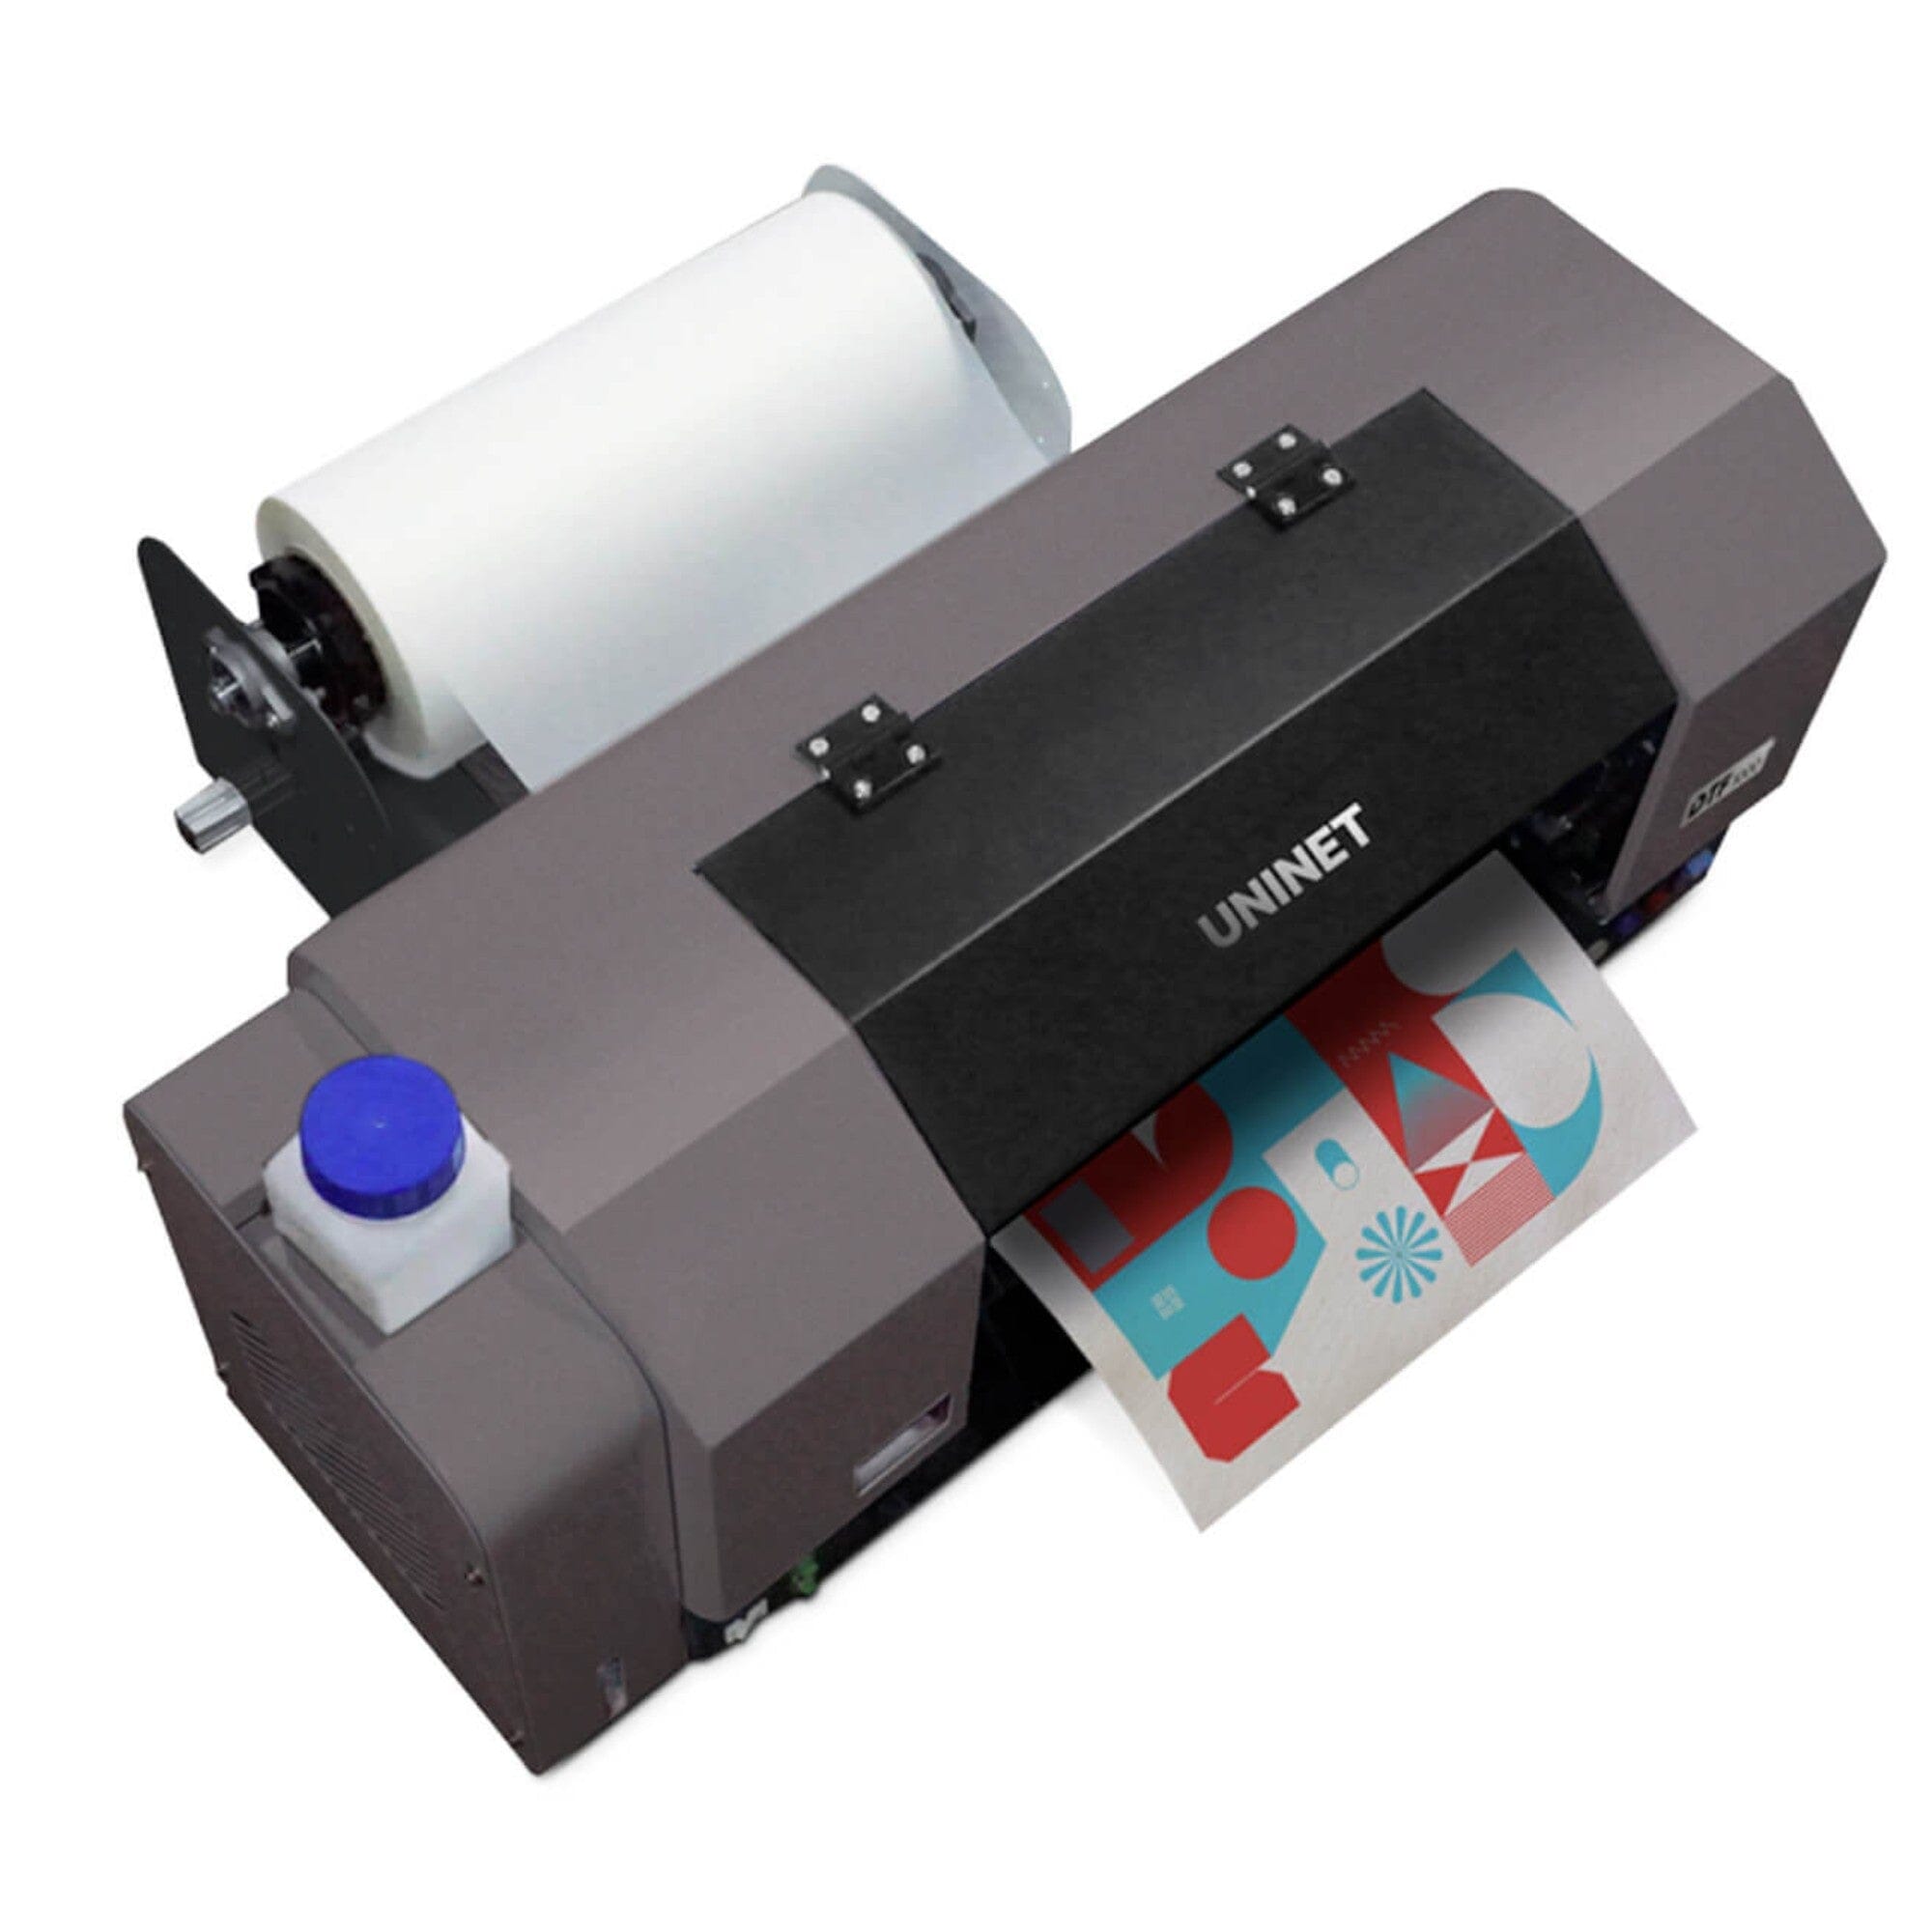 Uninet 1000 Direct to Film 13 Printer Production Bundle